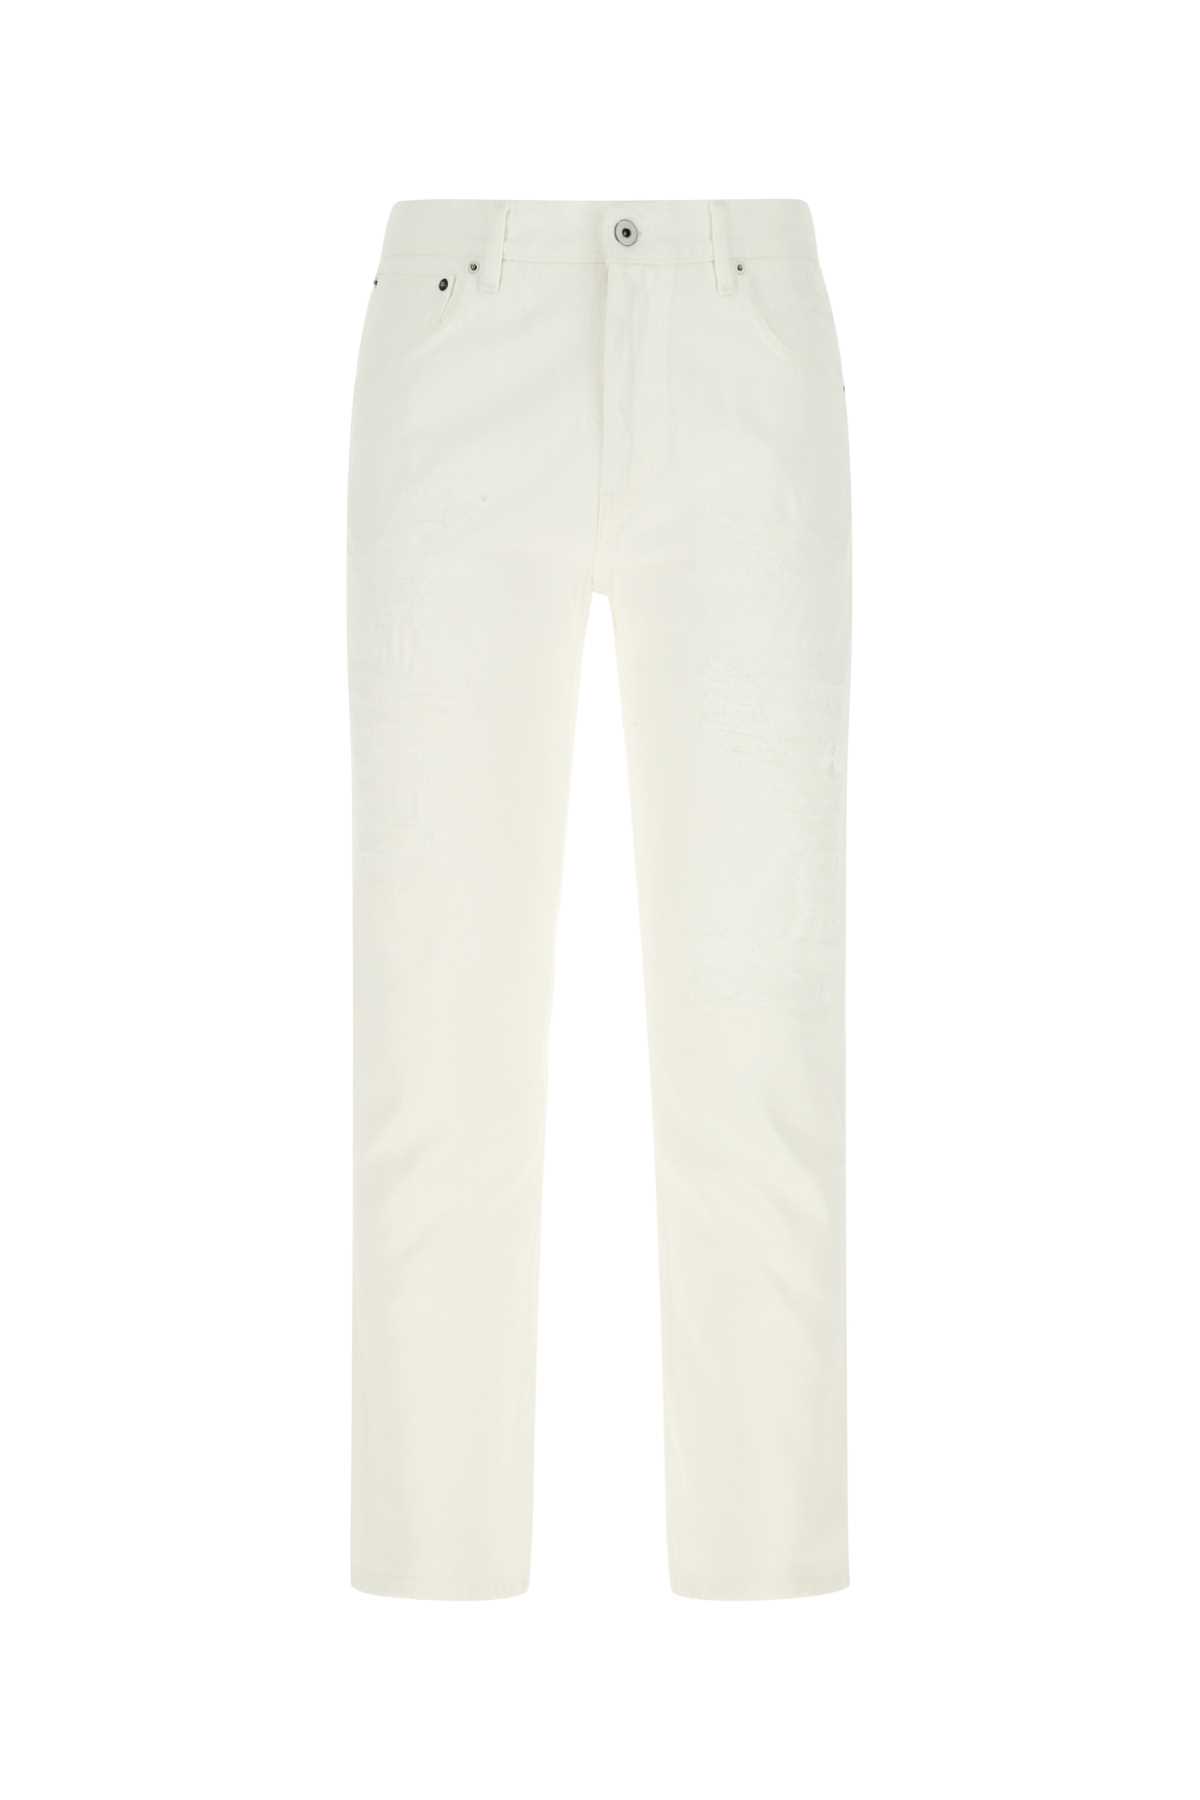 14 Bros White Denim Cheswick Jeans